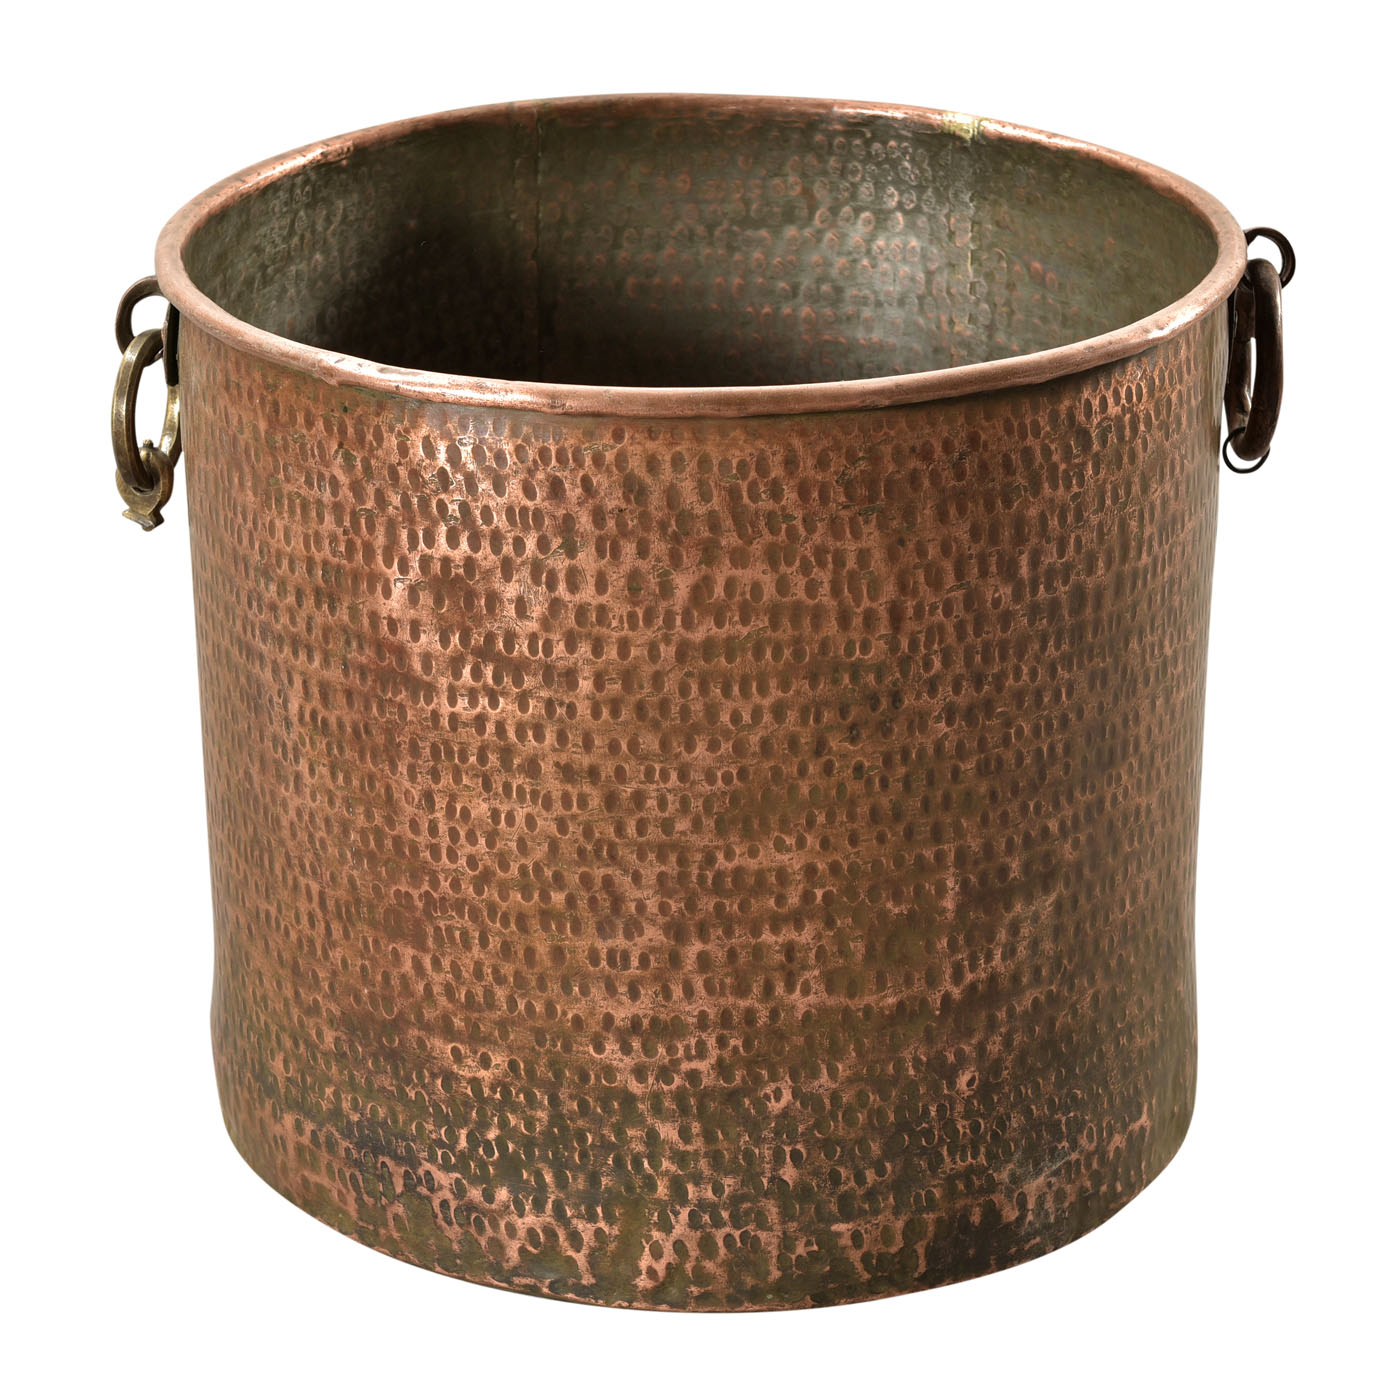 Antique Copper Pot with Patina: Decorative Metallic Pot or Planter